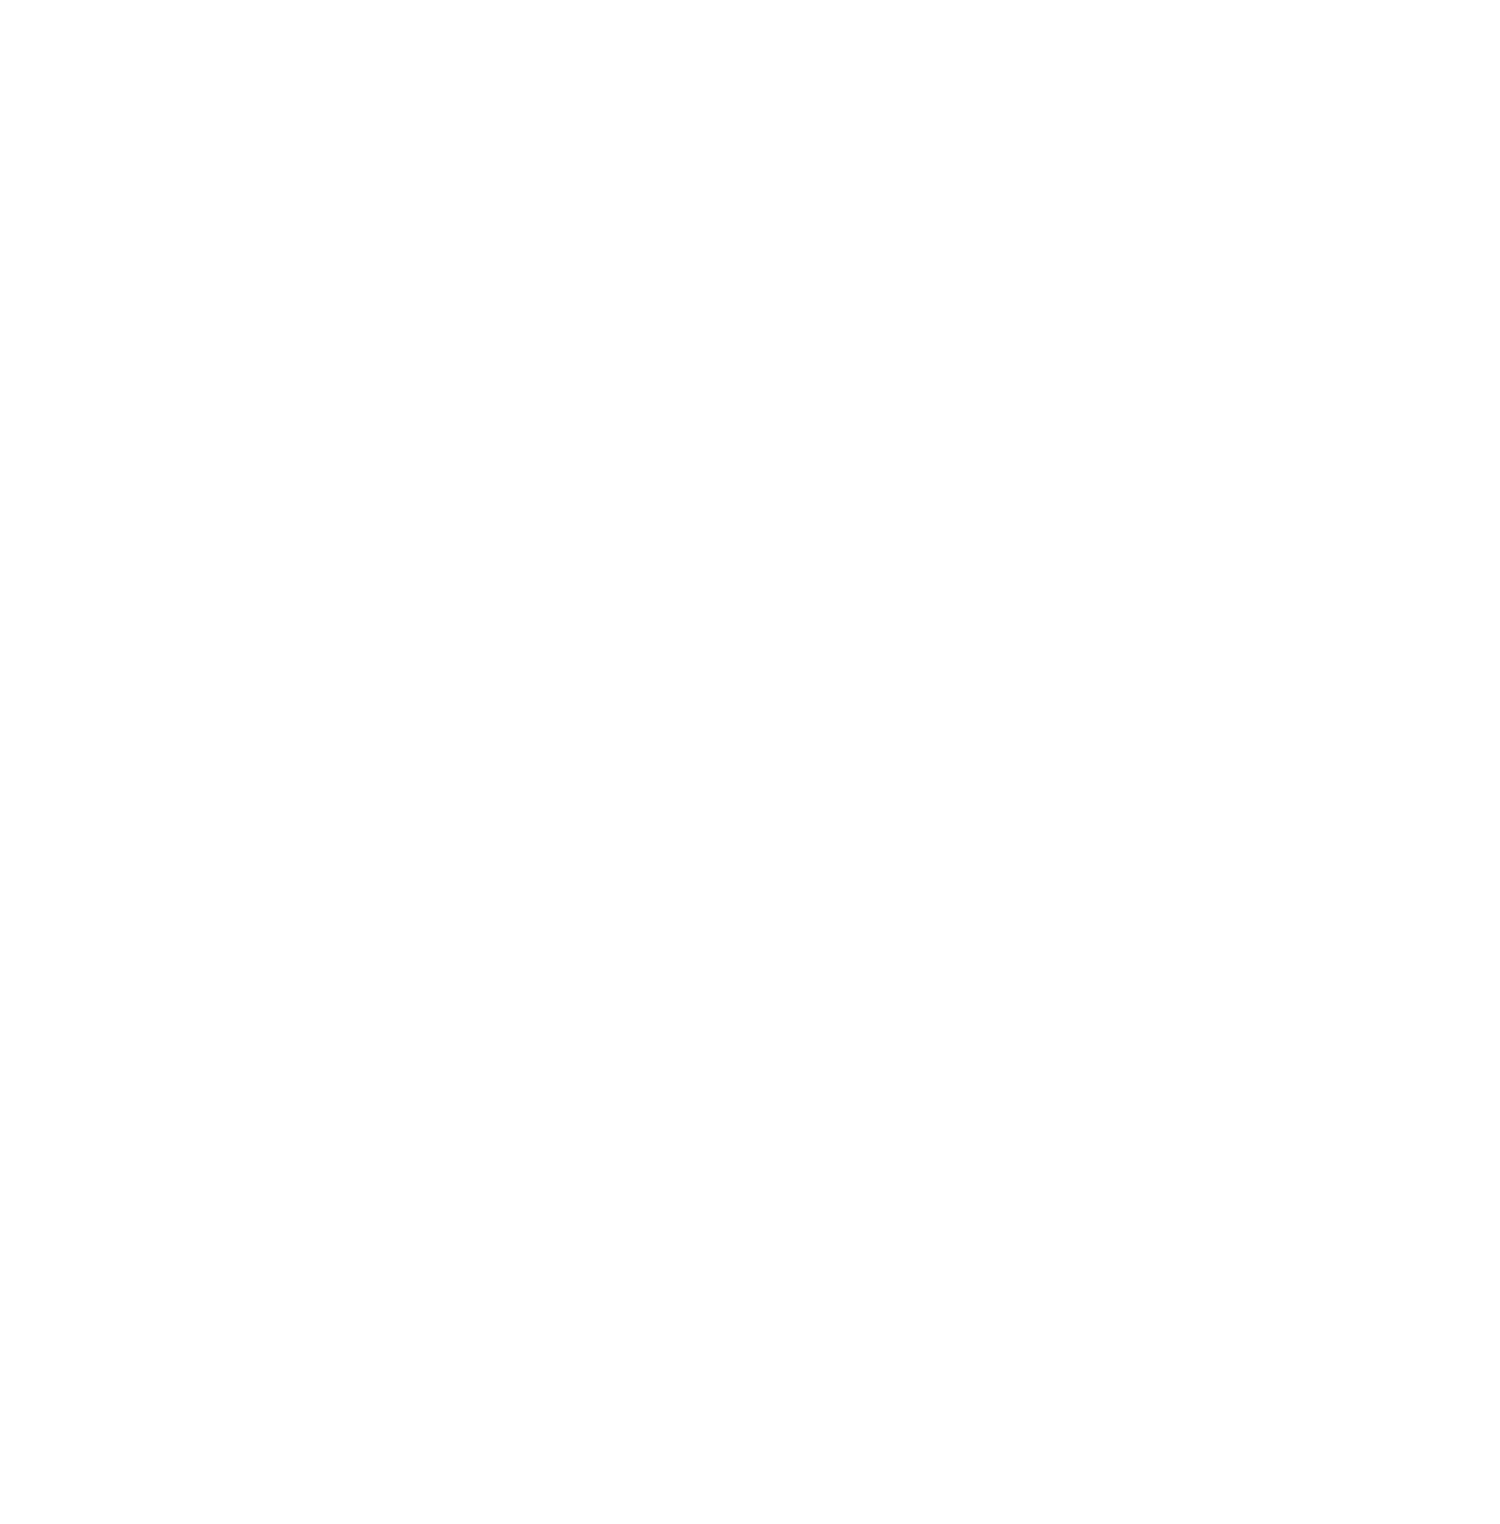 https://www.iaccess.life/wp-content/uploads/2018/08/03e66b20-iaccess-life-white-logo.png